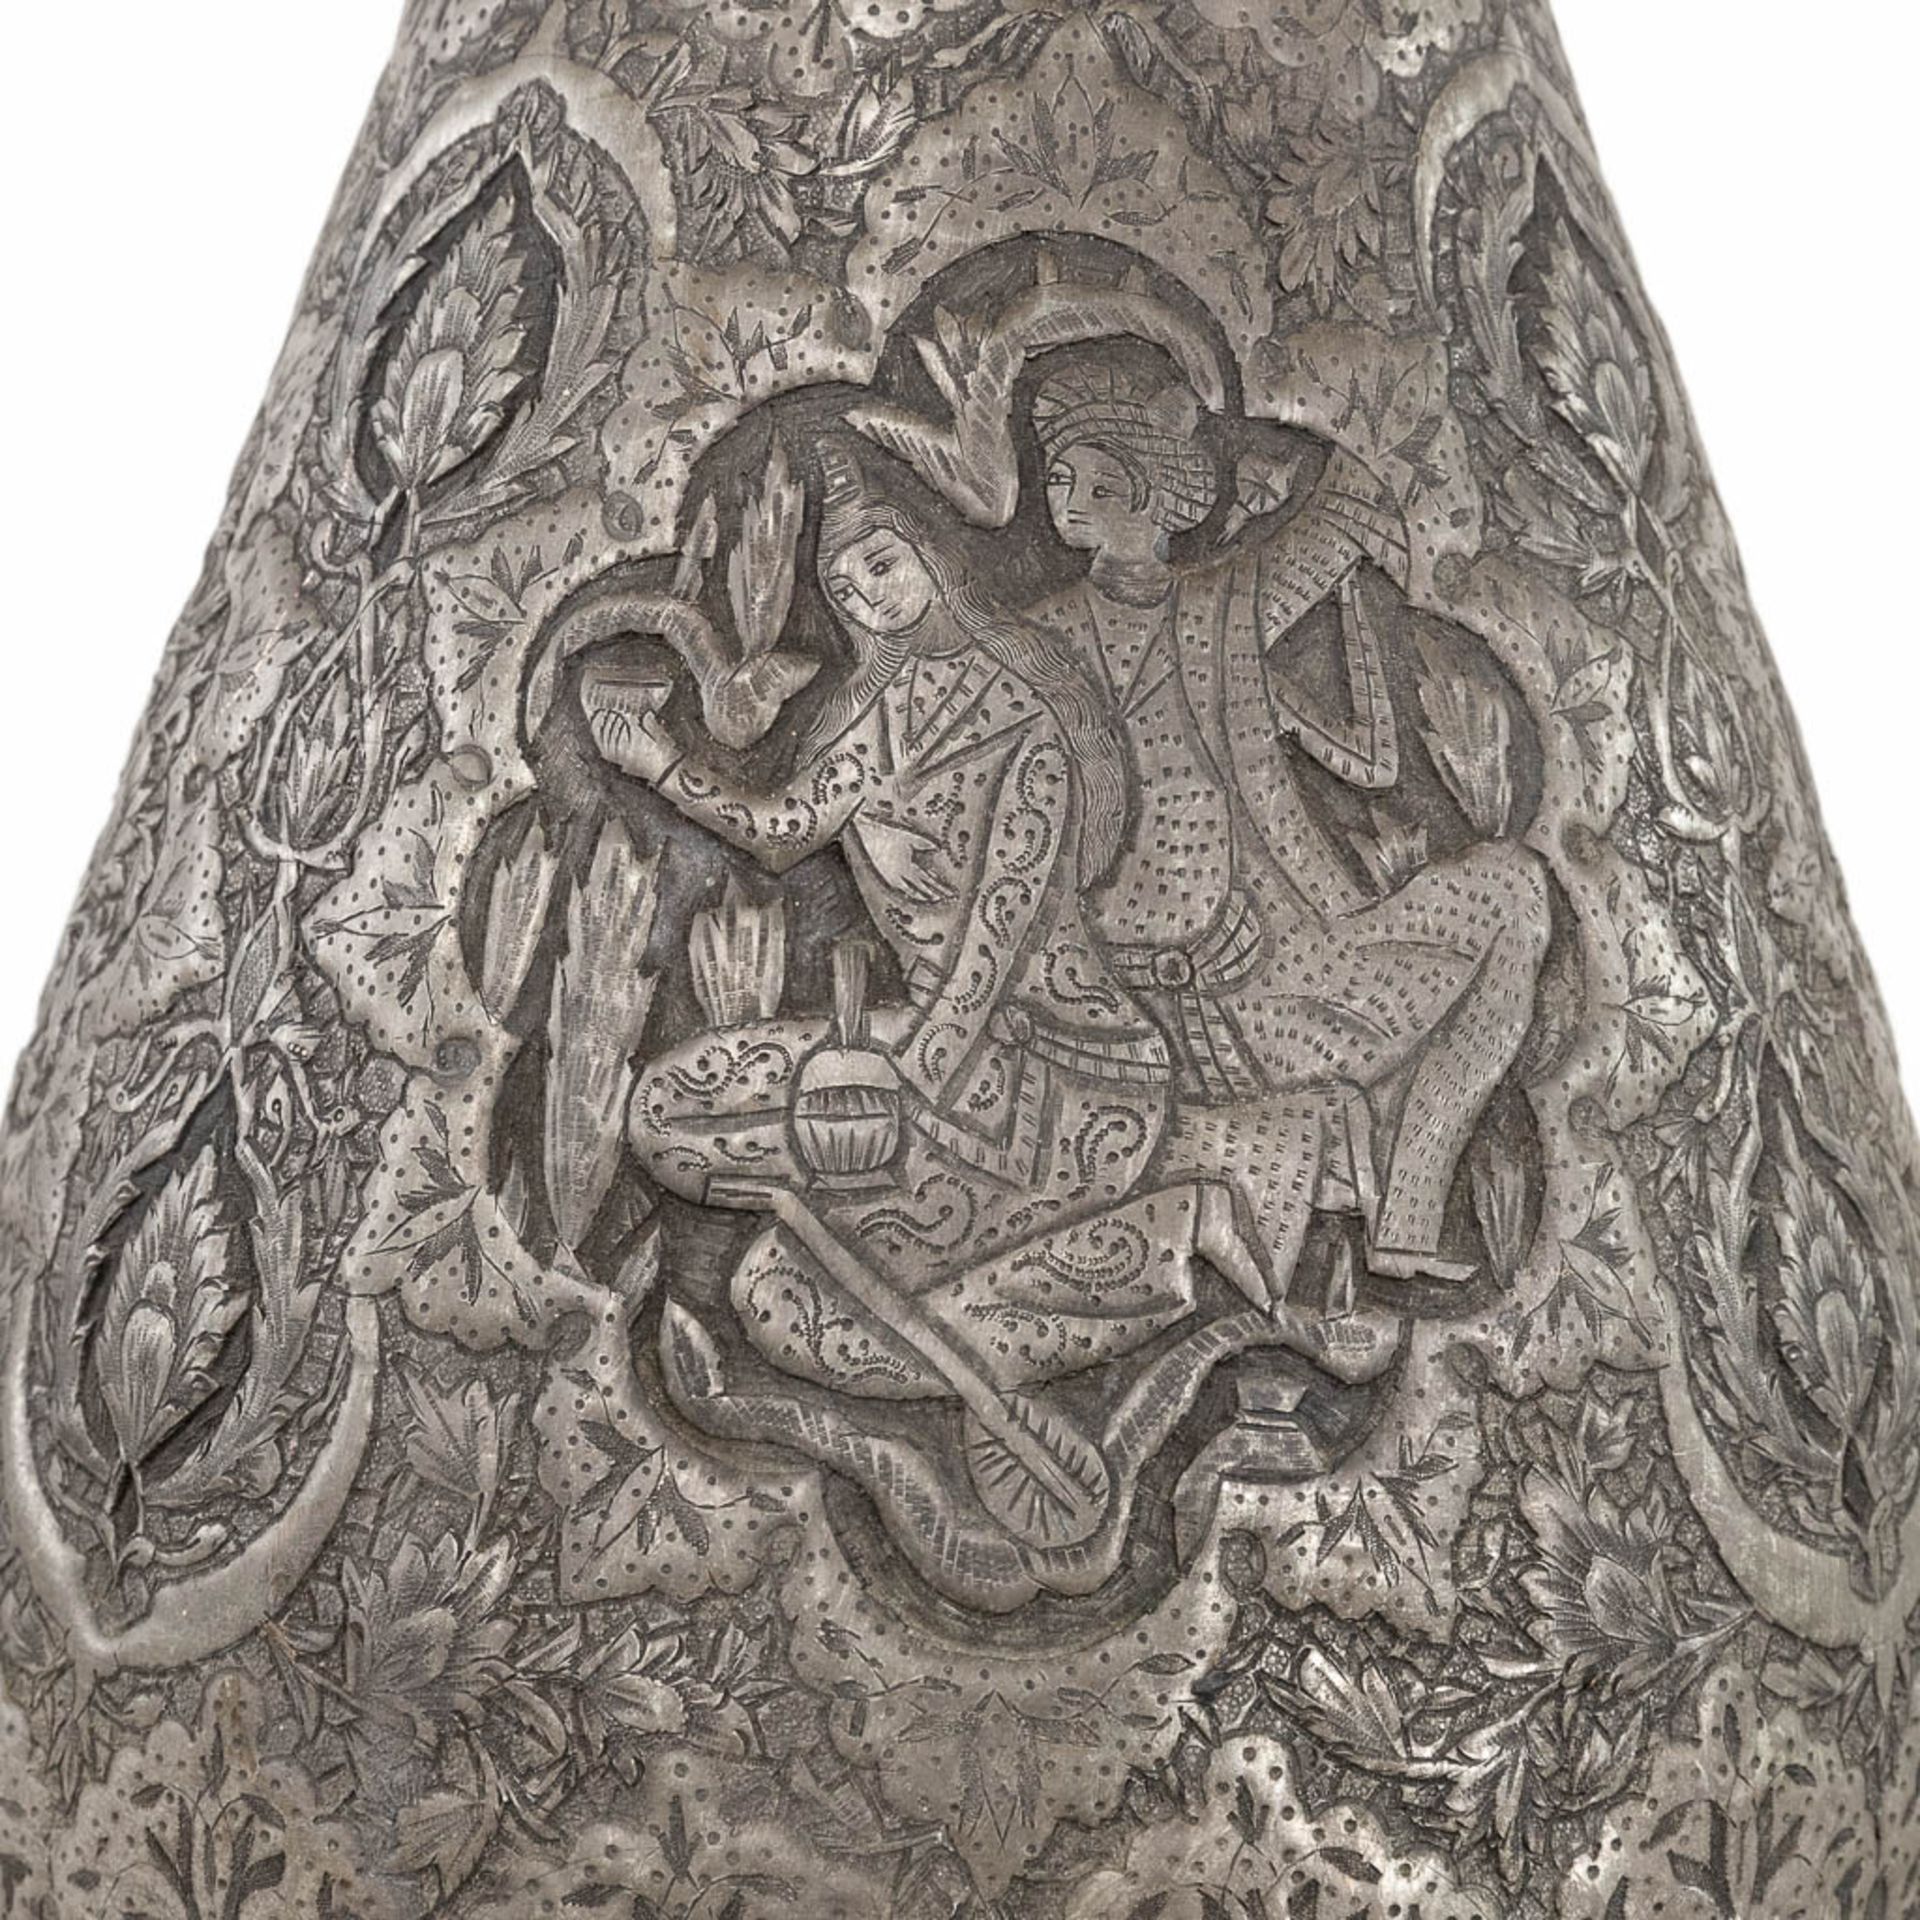 A large decorative vase, India. 19th C. (H:128 x D:32 cm) - Image 11 of 14